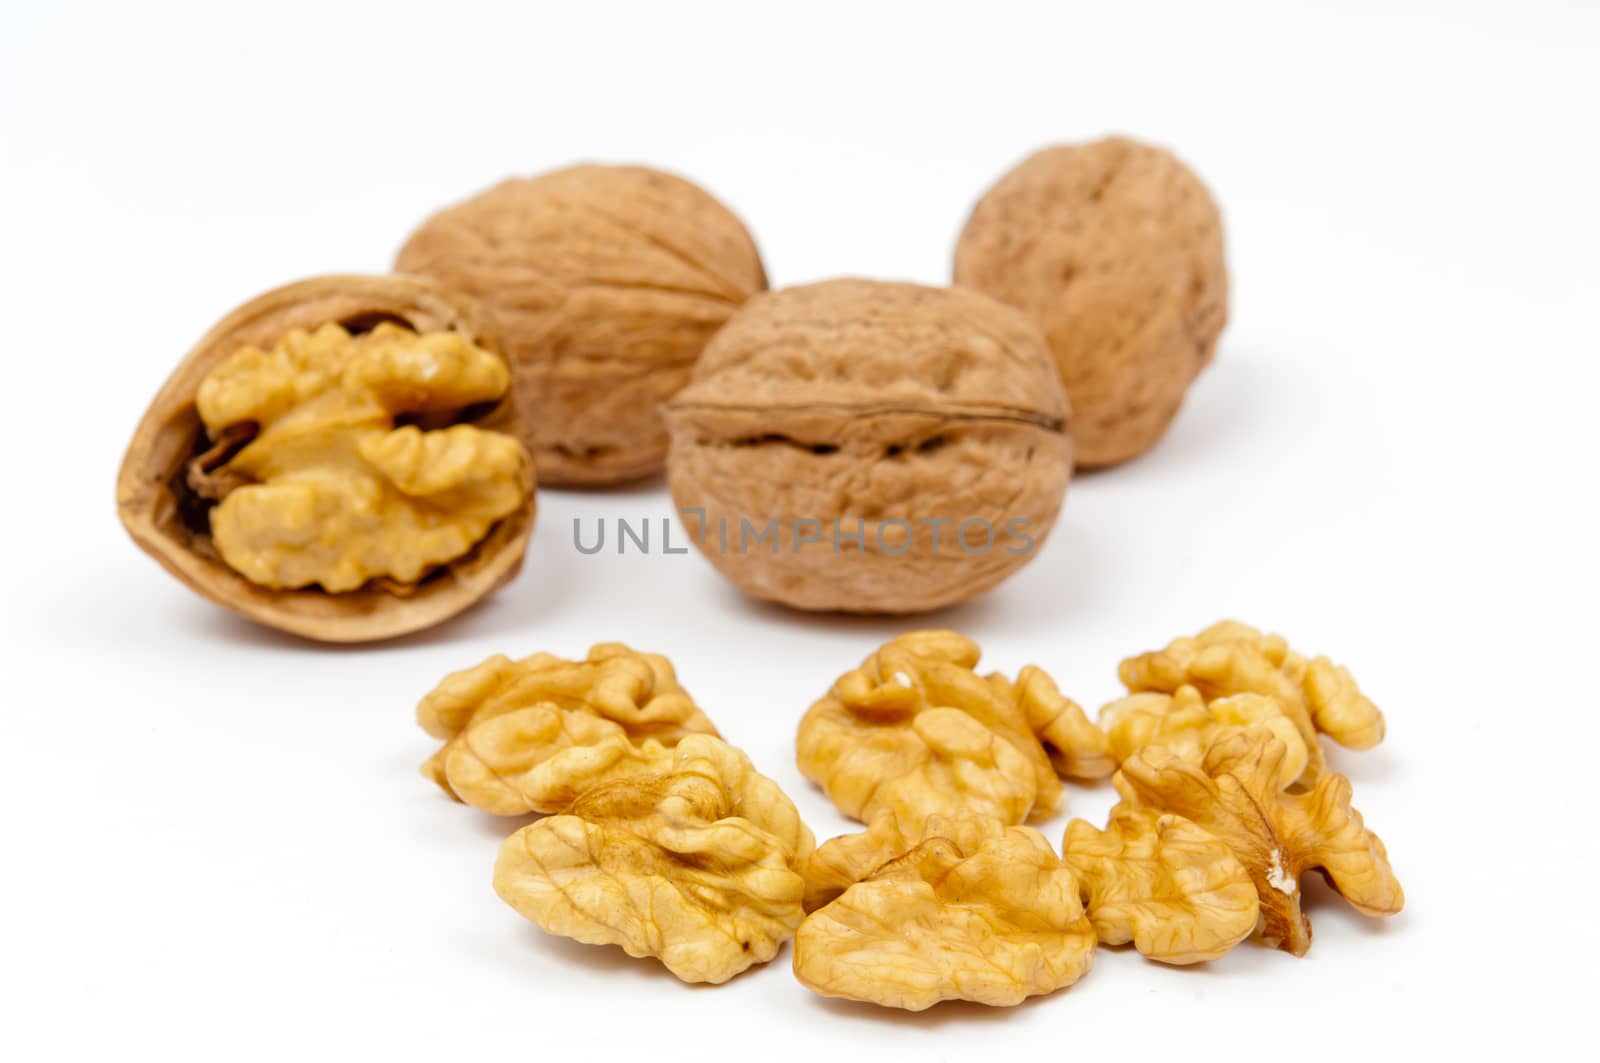 Whole walnuts and walnut kernels on white background